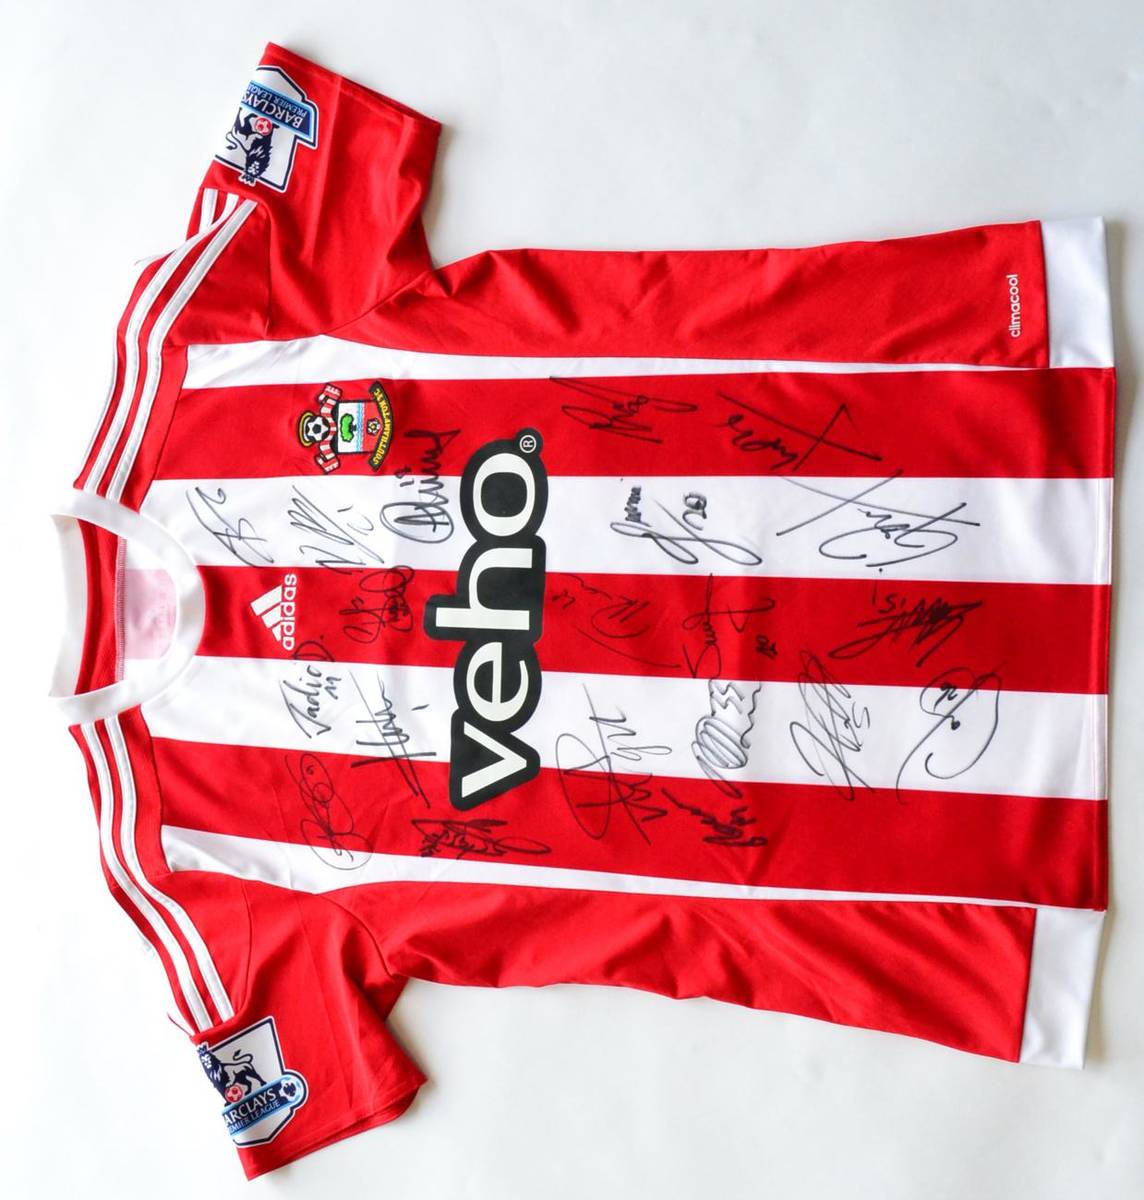 Lot 48 - Signed Football Shirt Southampton, Red/White Stripes